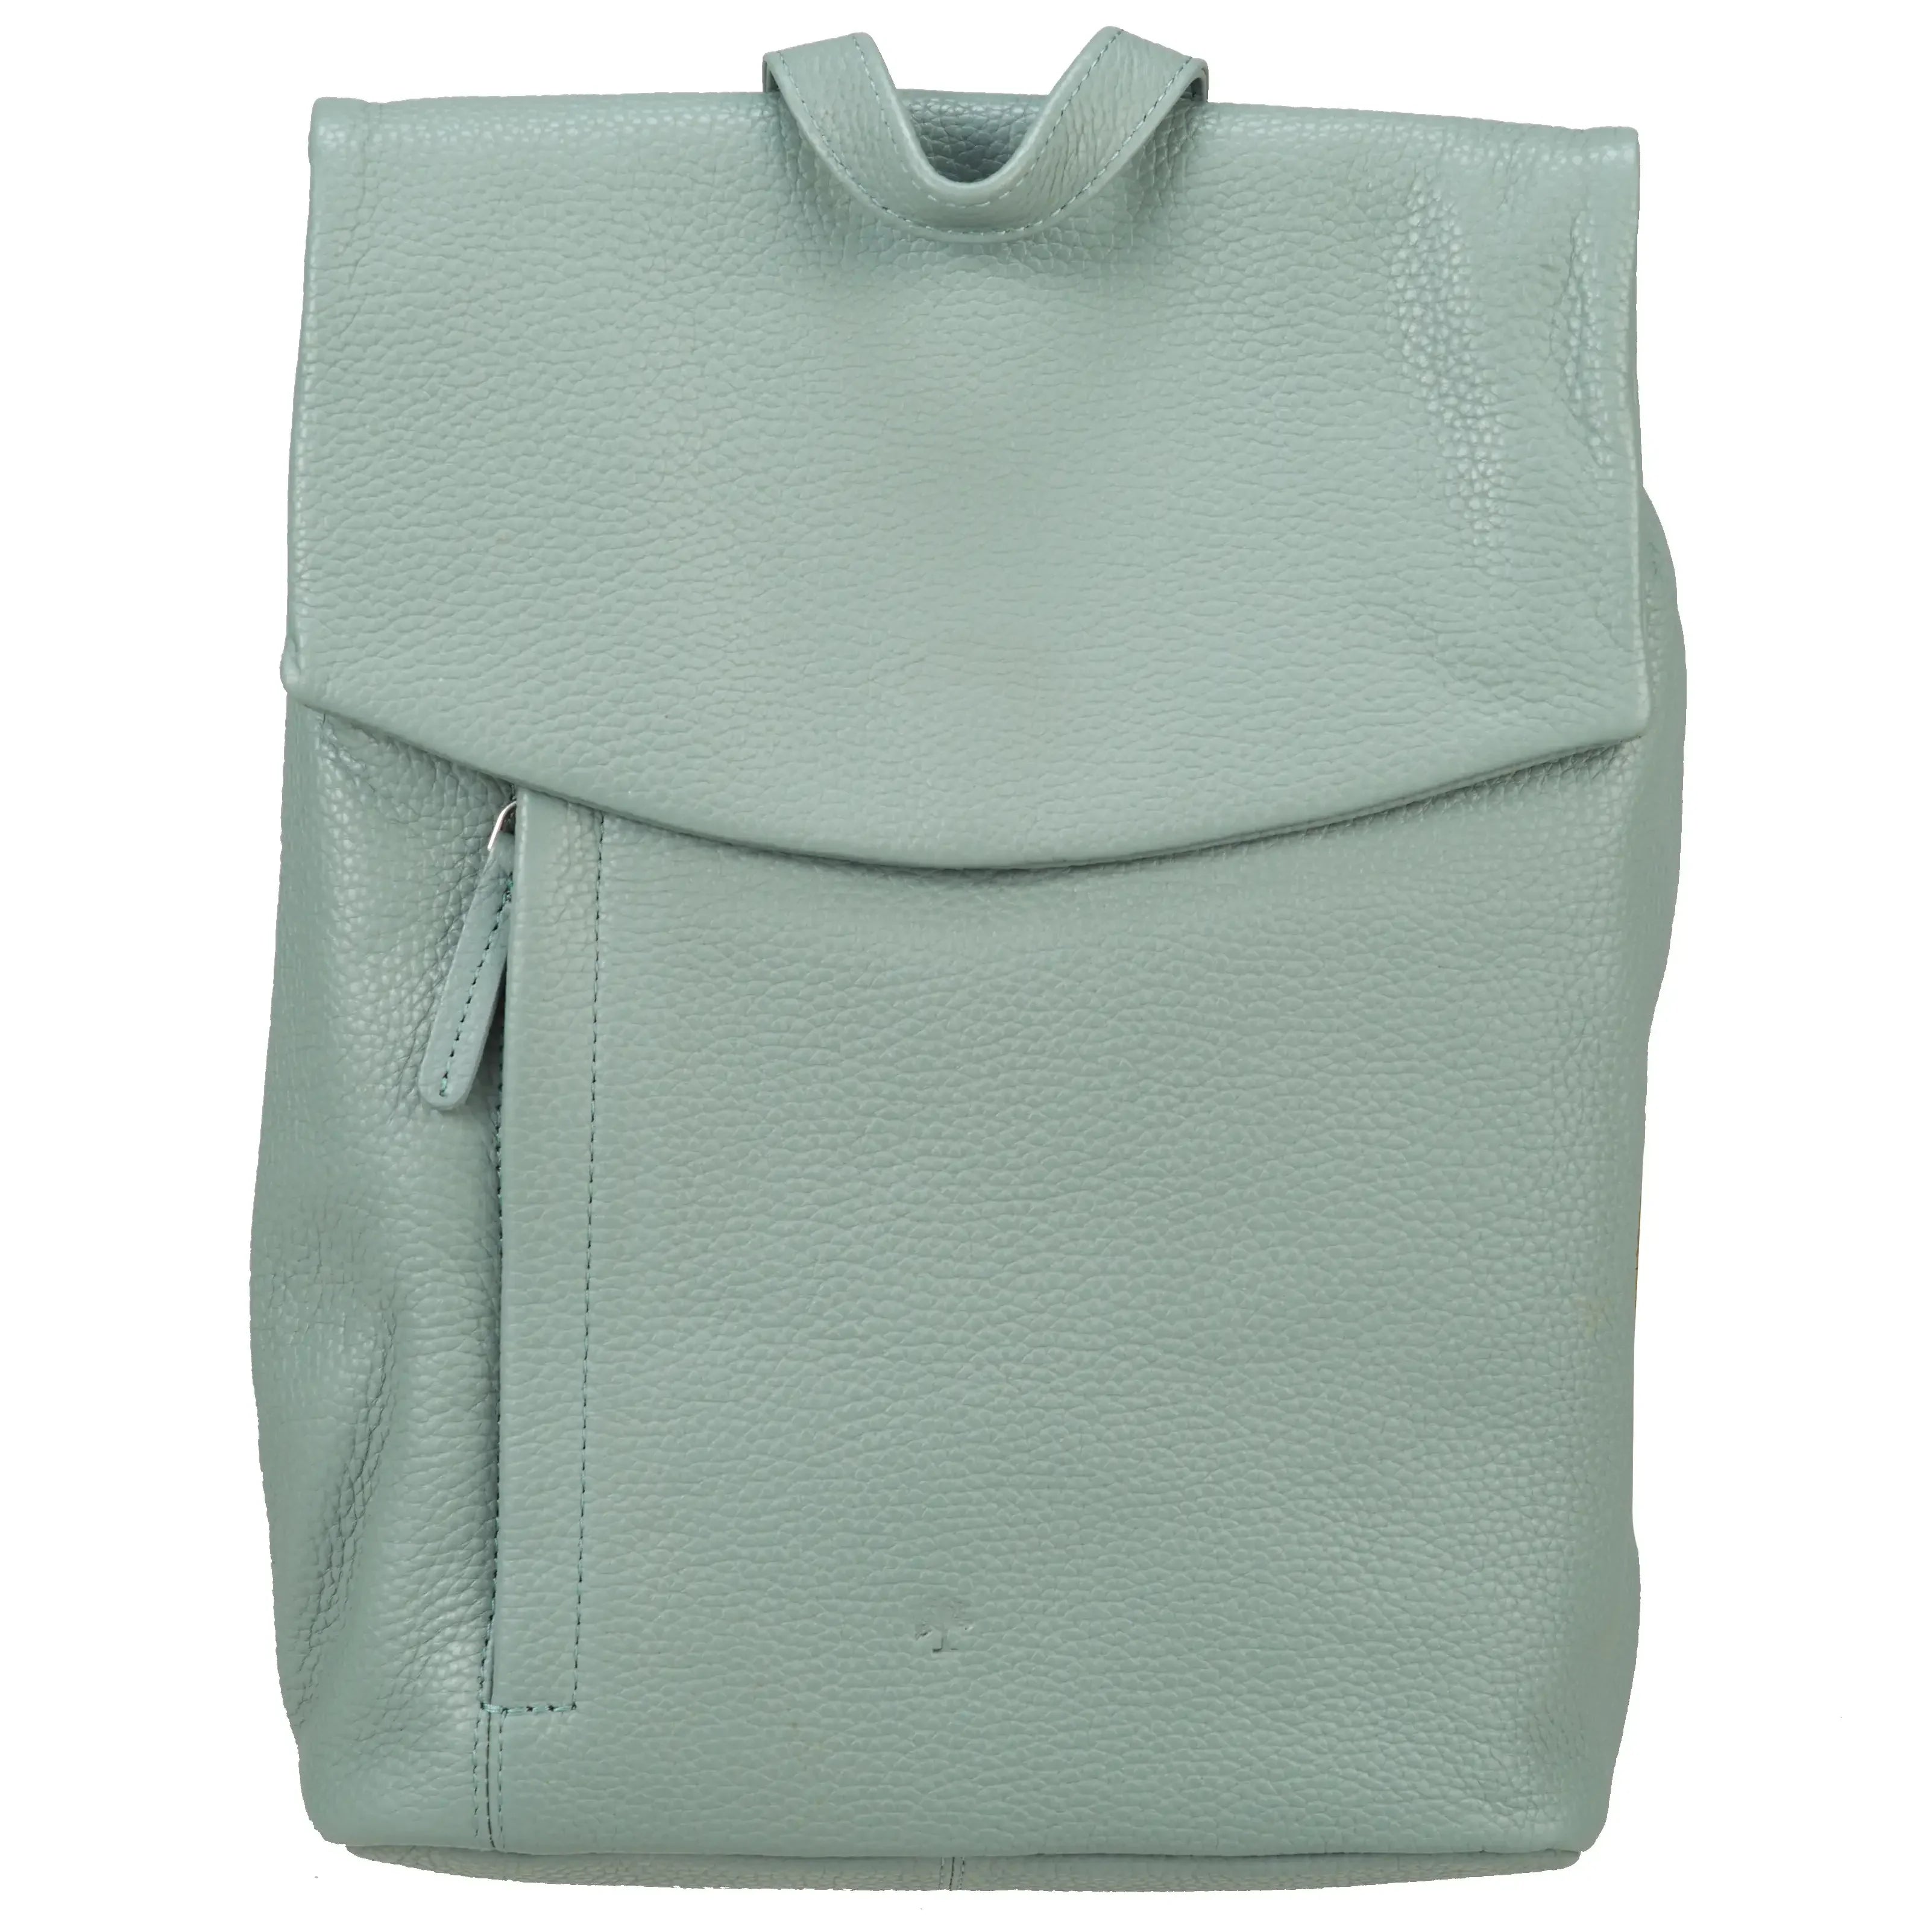 koffer-direkt.de Prato city backpack 33 cm - light green